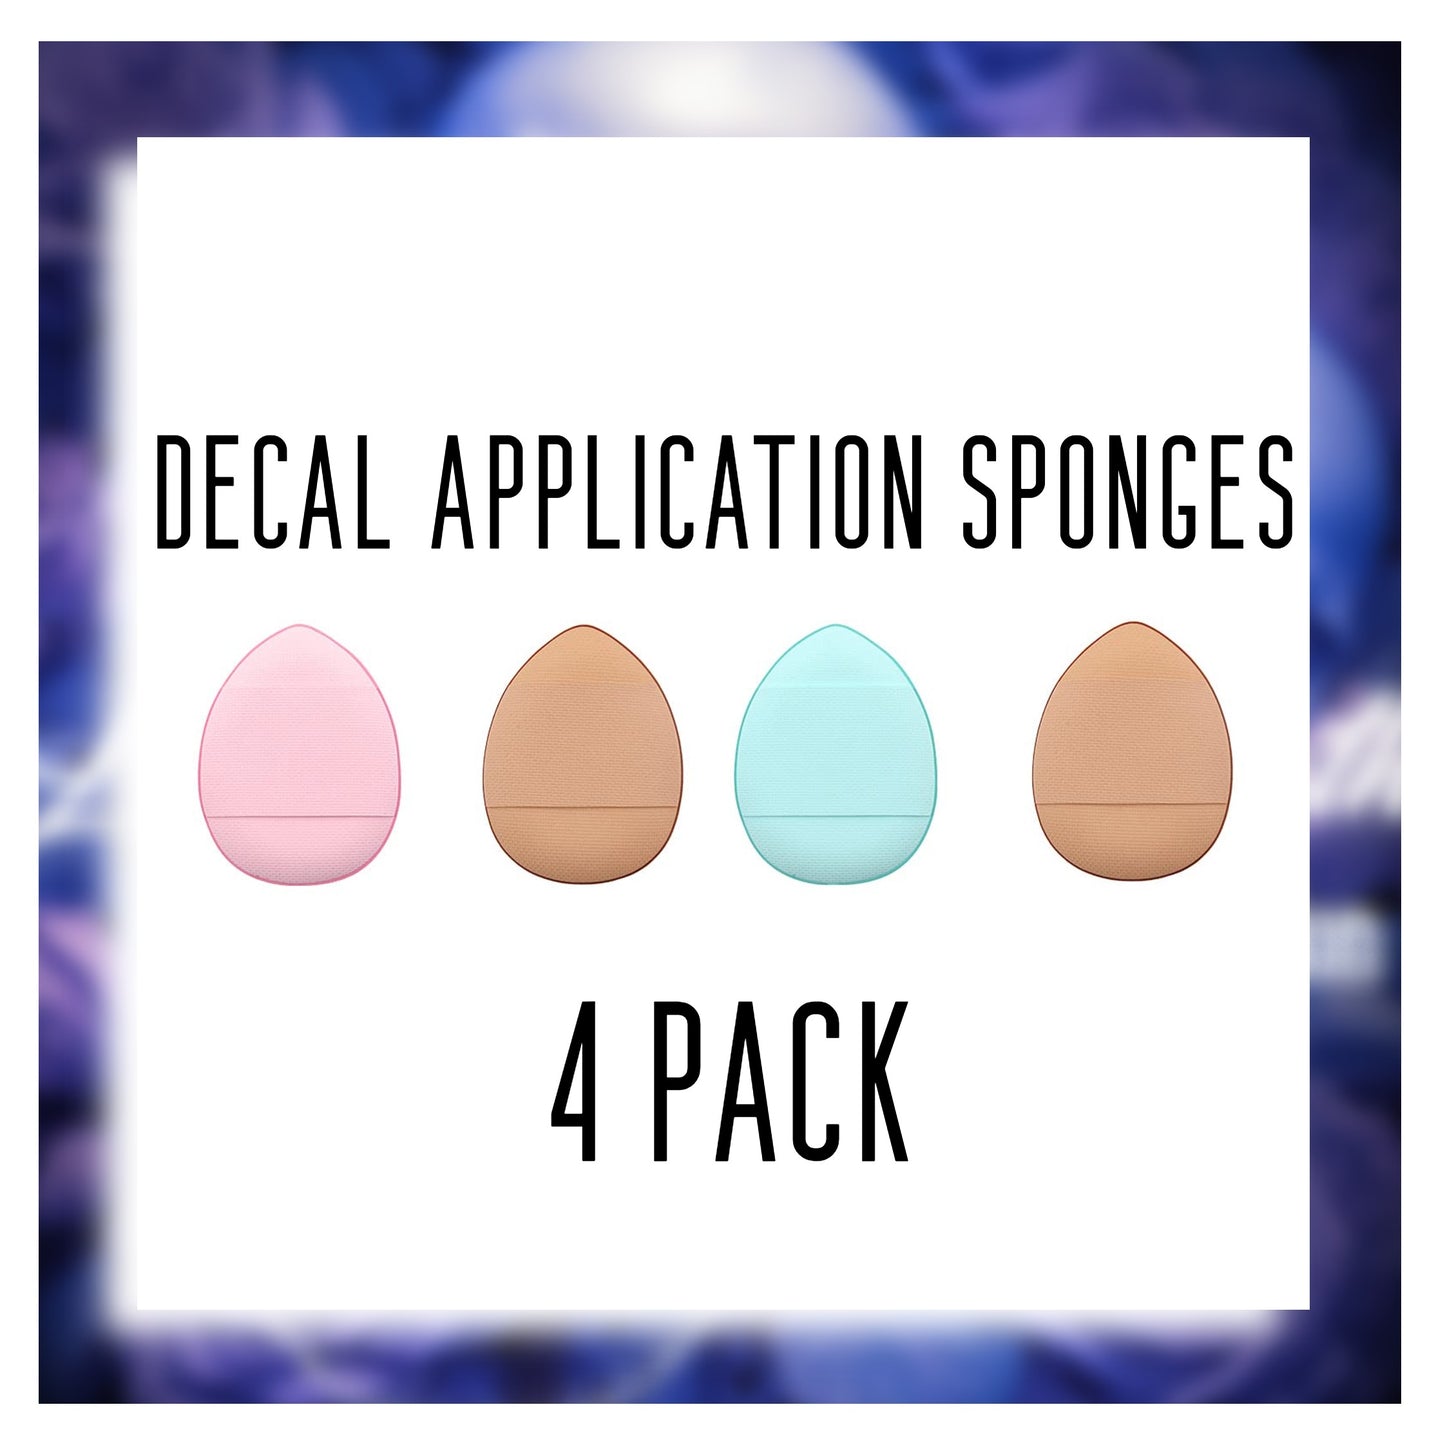 4 Pack Of Application Sponges